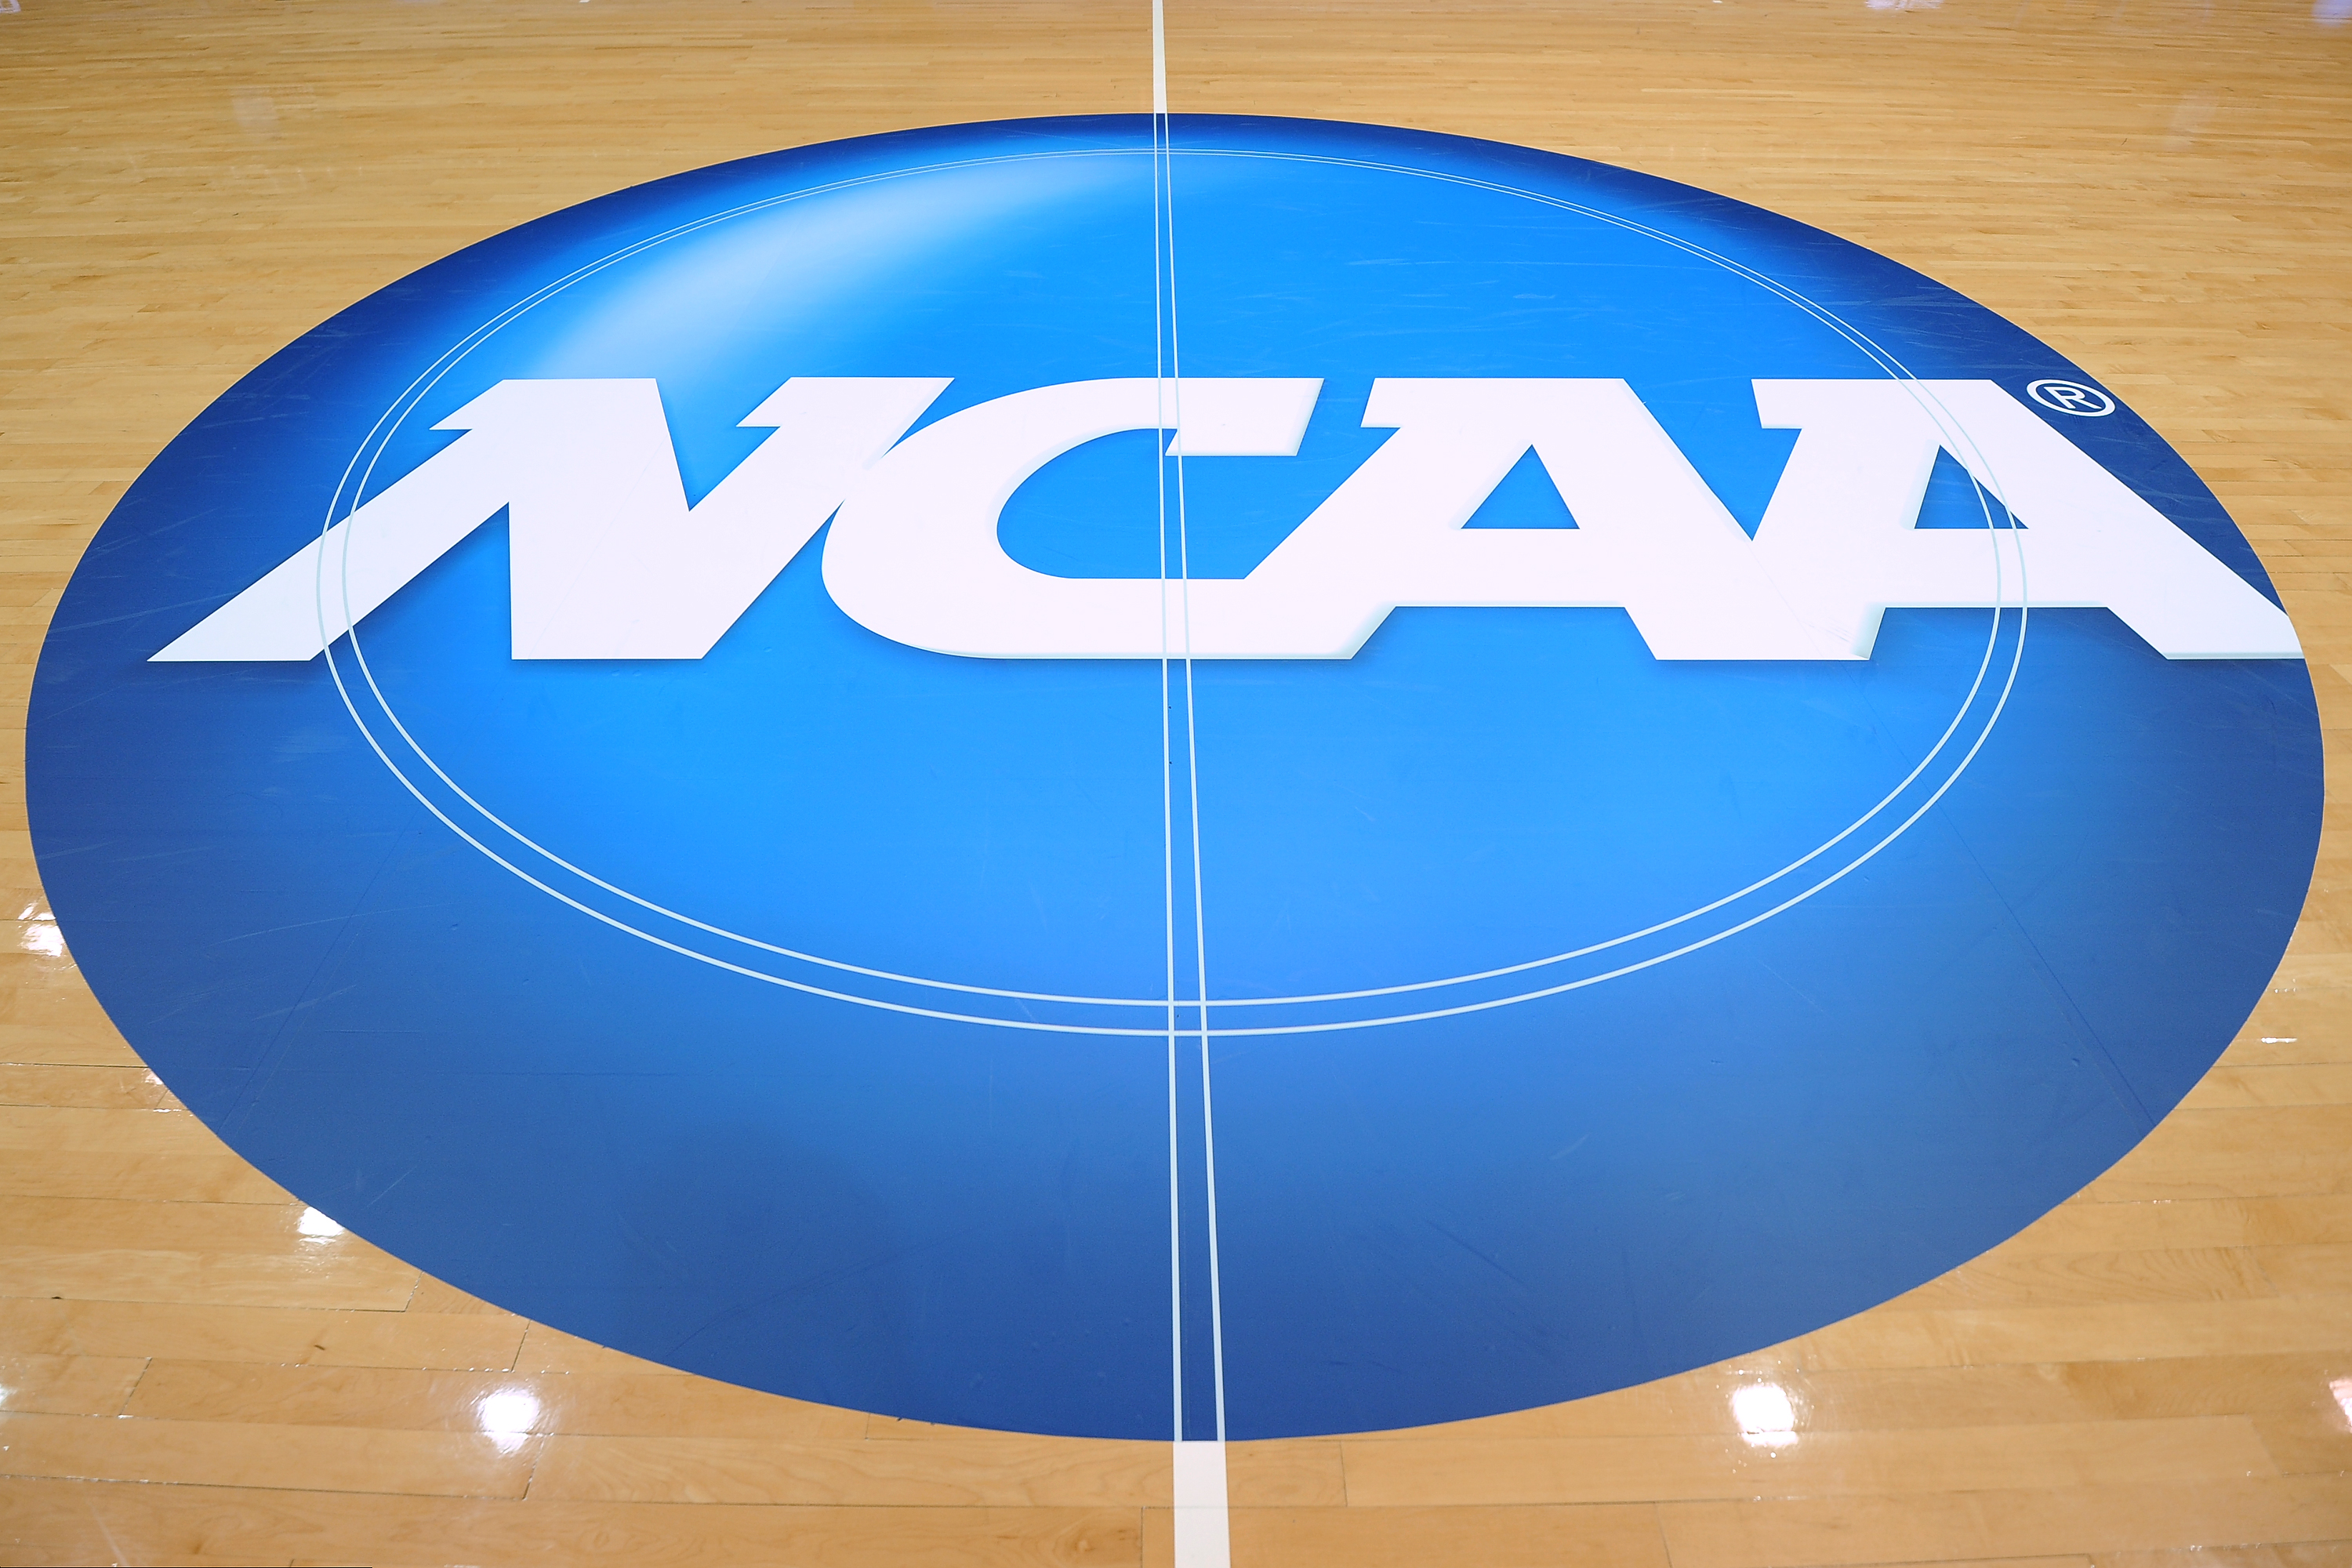 NCAA denies OSU's penalty appeal